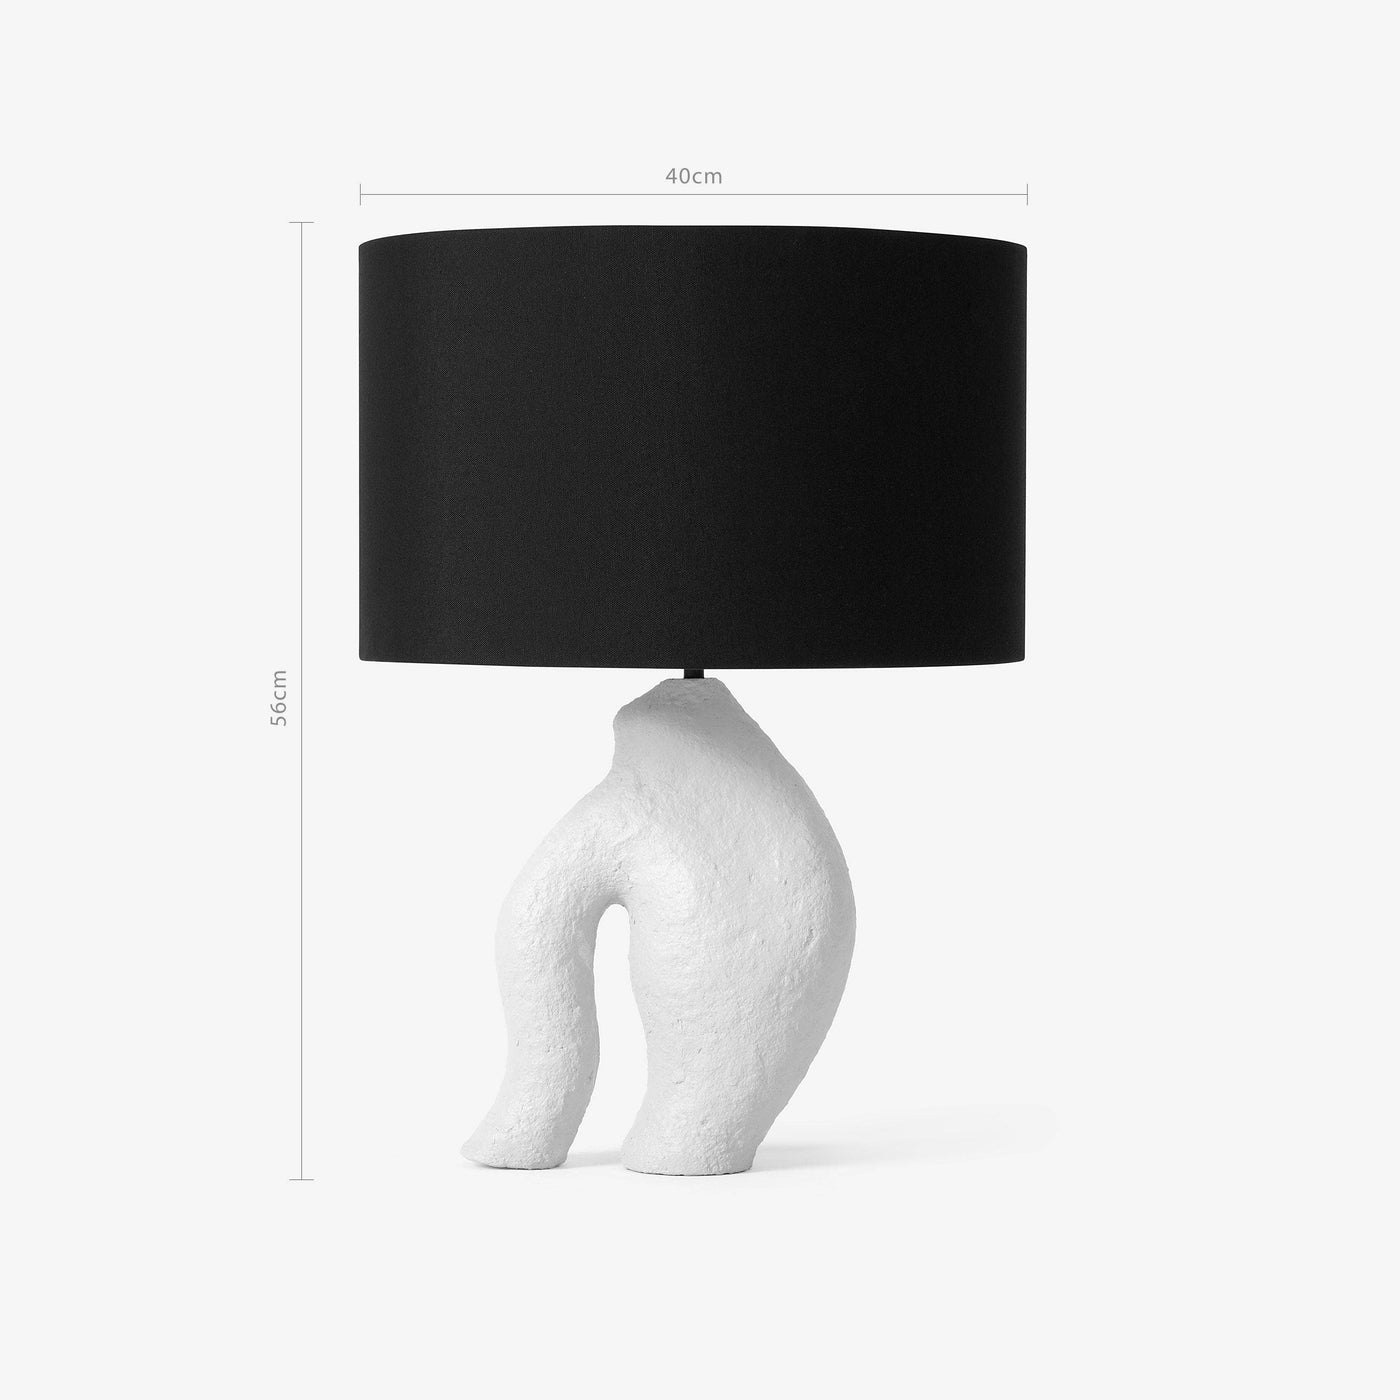 Rya Papier Mâché Table Lamp, Grey Table & Bedside Lamps sazy.com